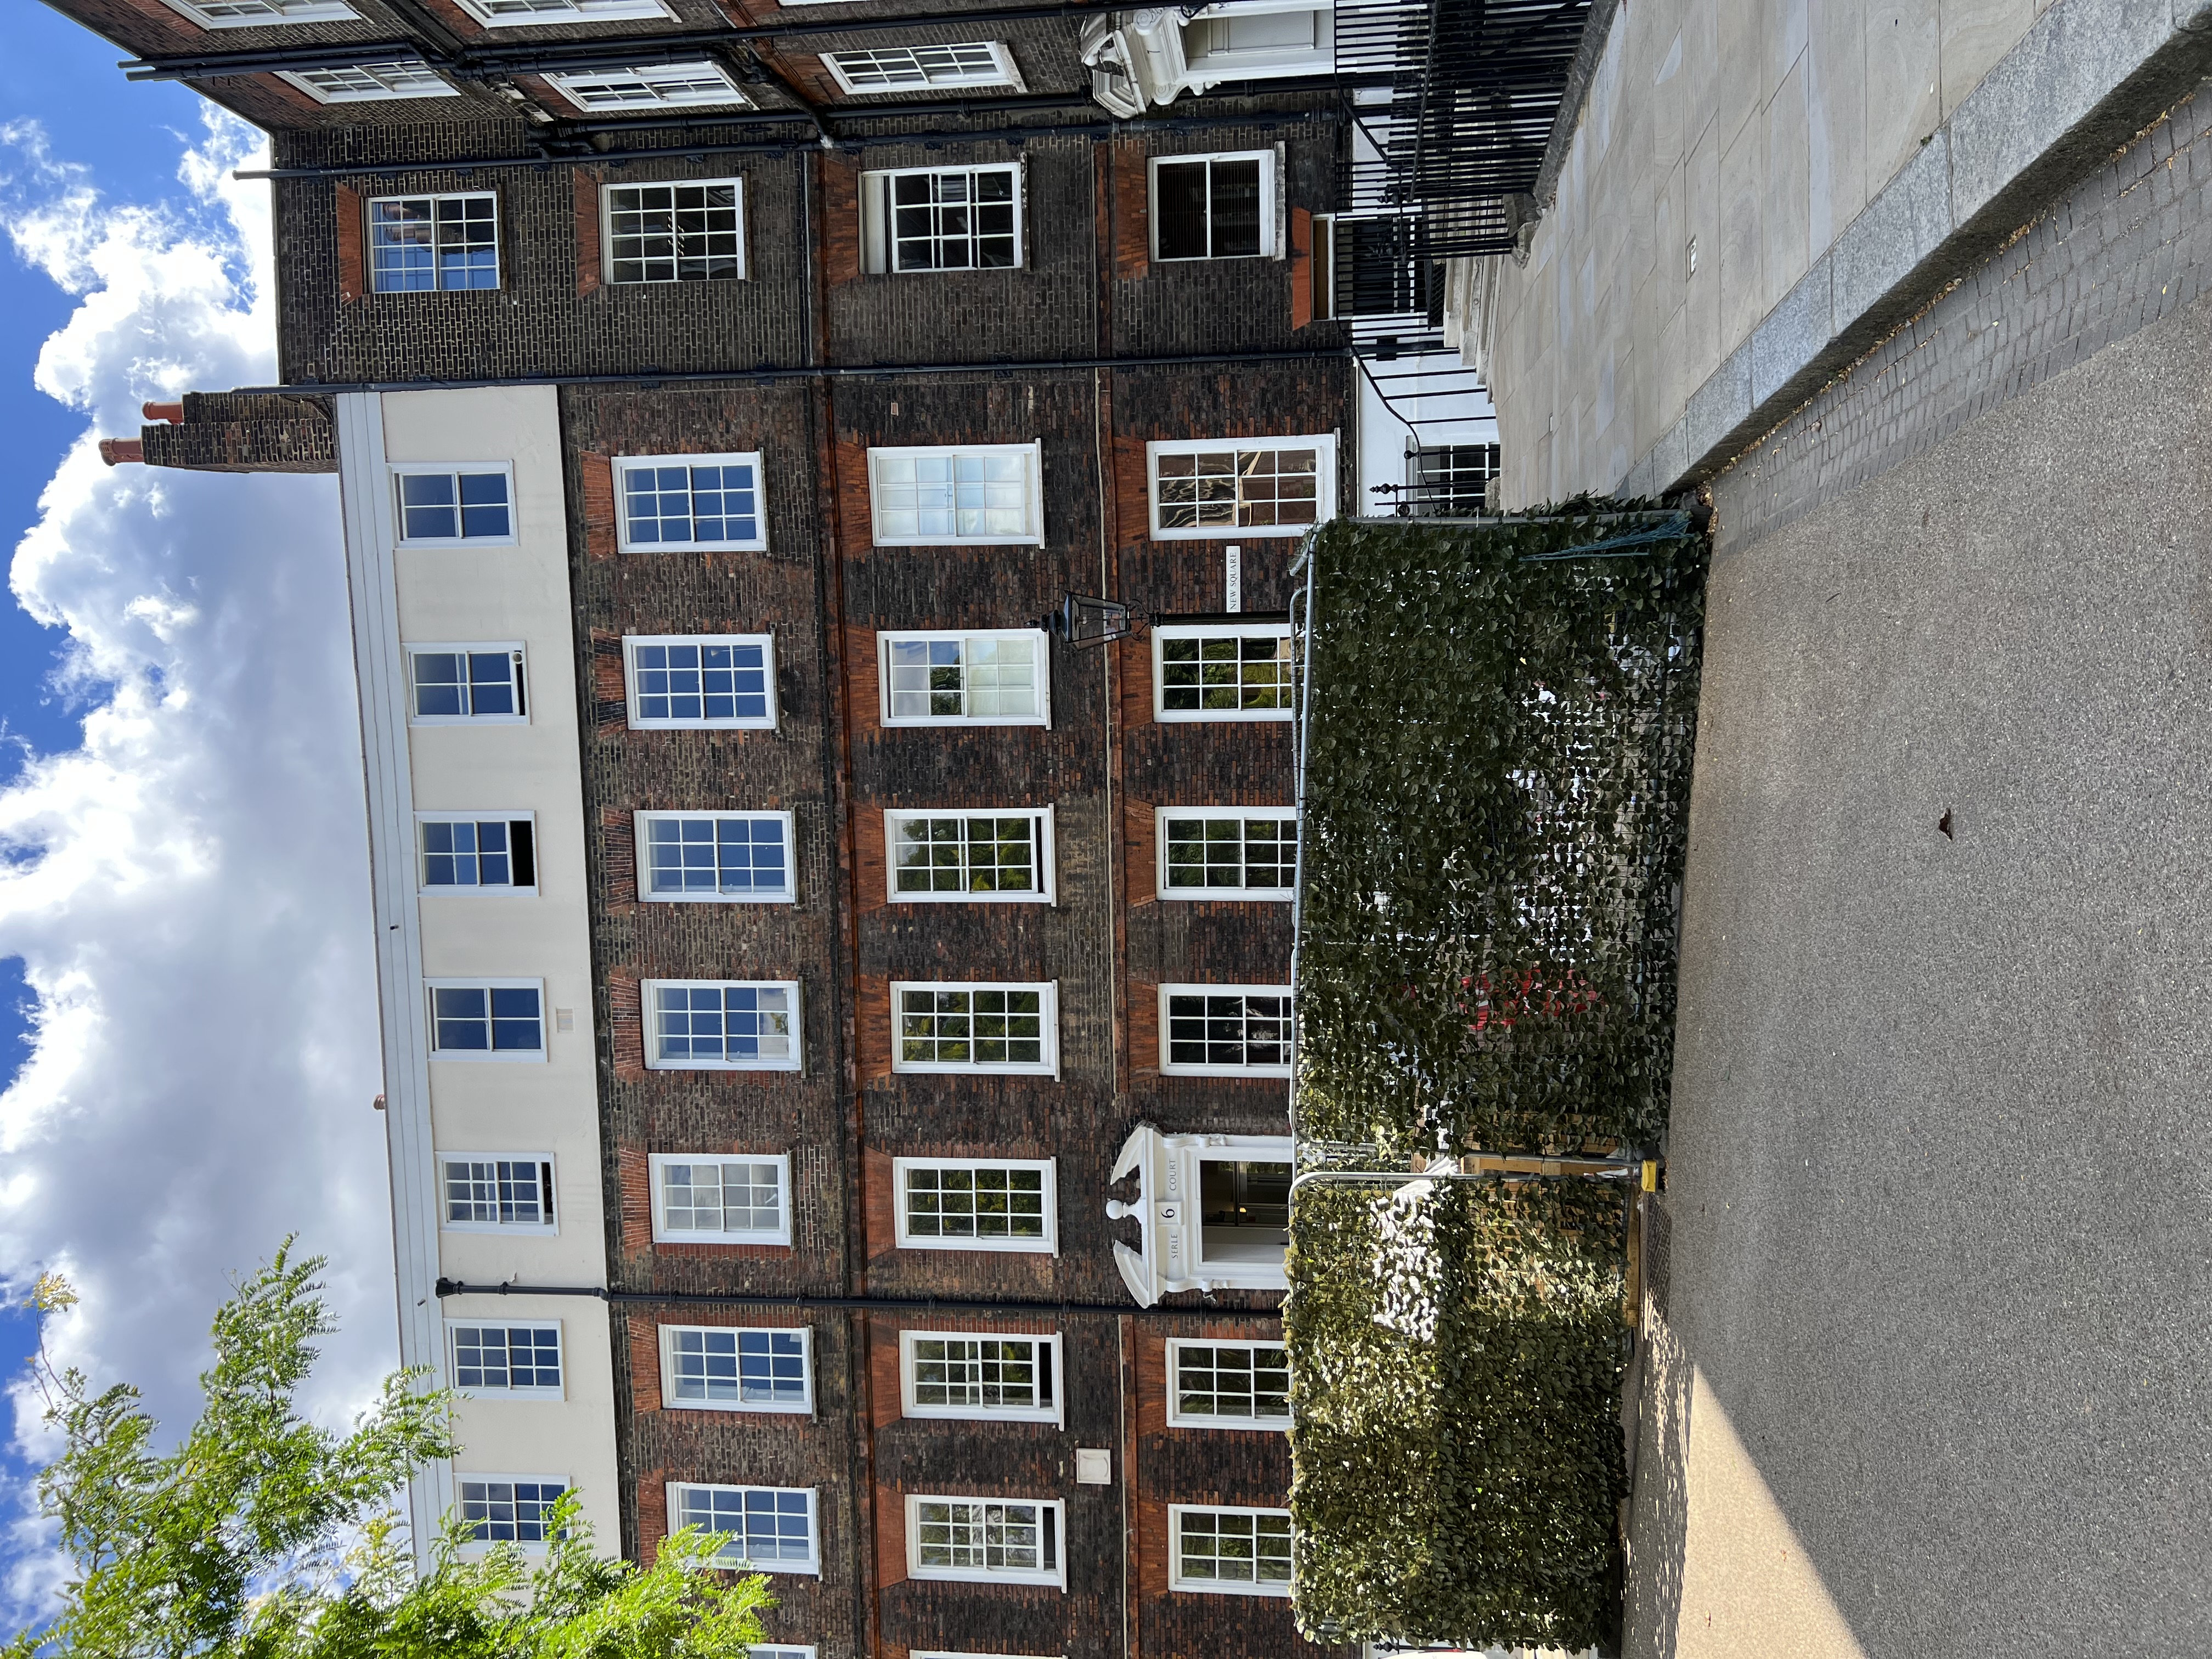 A brick Georgian rowhouse with white sash windows looks onto a London garden square.